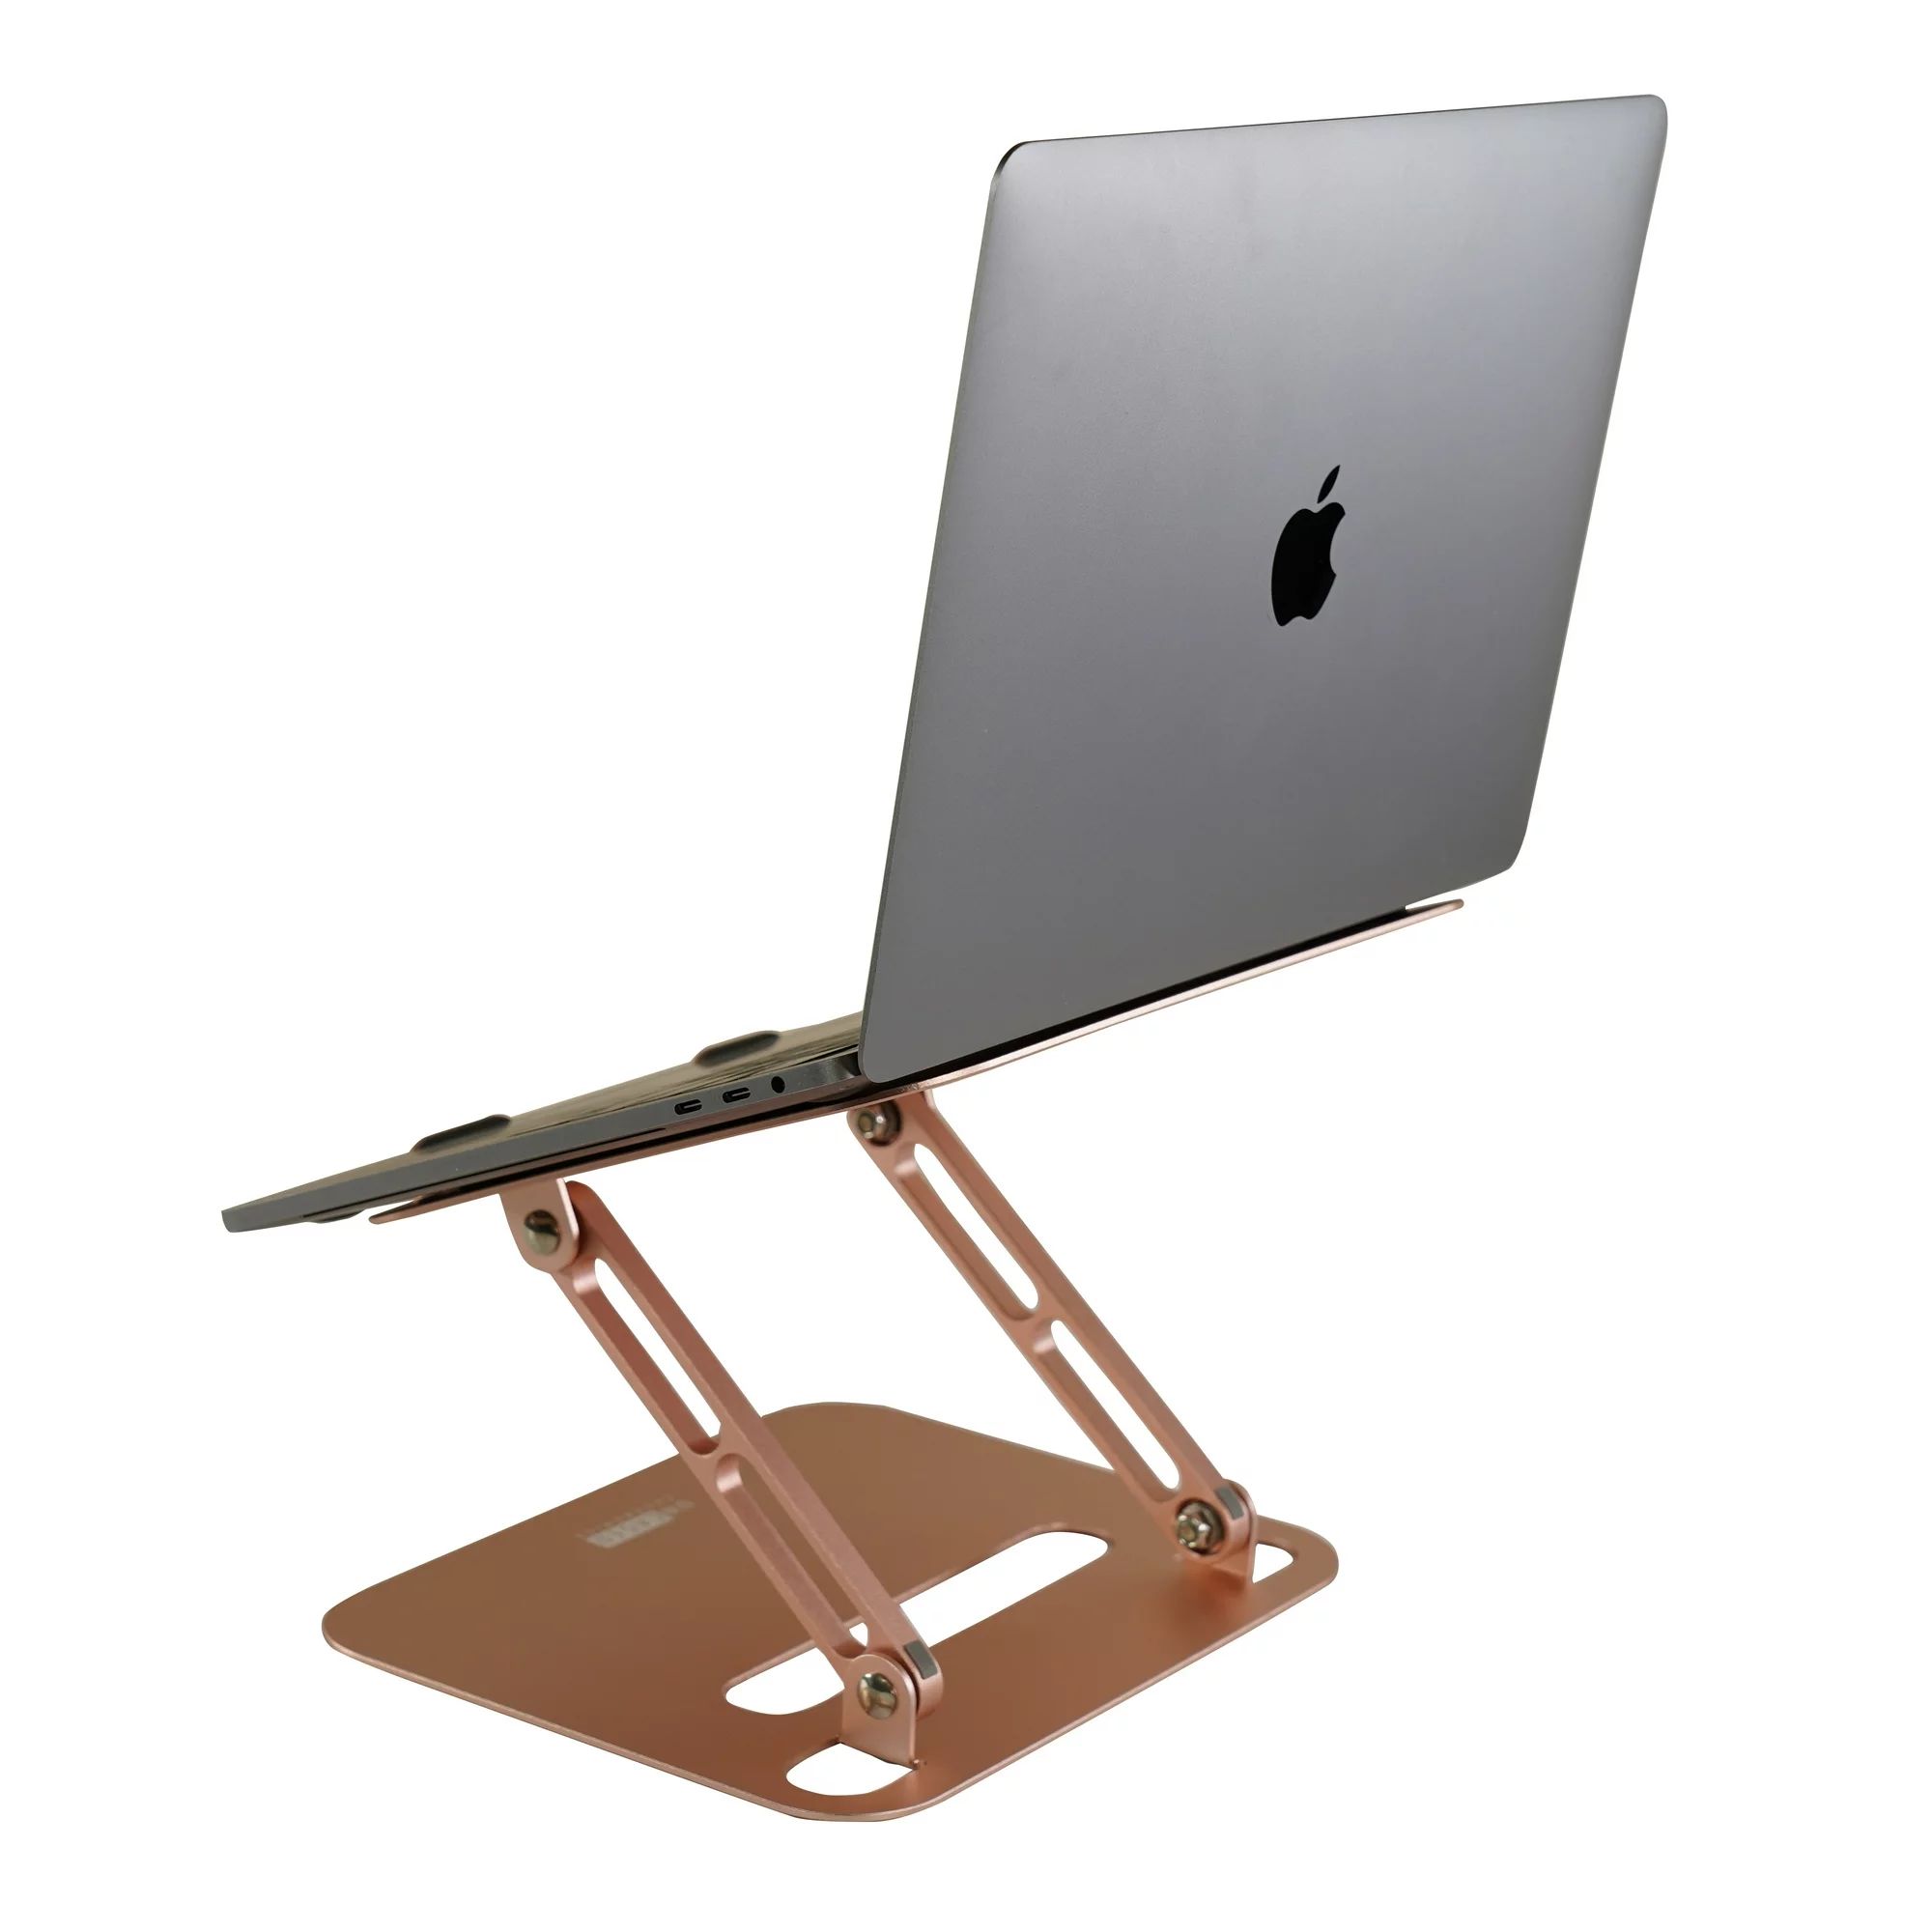 Uncaged Ergonomics RISE desktop laptop stand ergonomic adjustable height tilt rose gold (rise-rg) | Walmart (US)